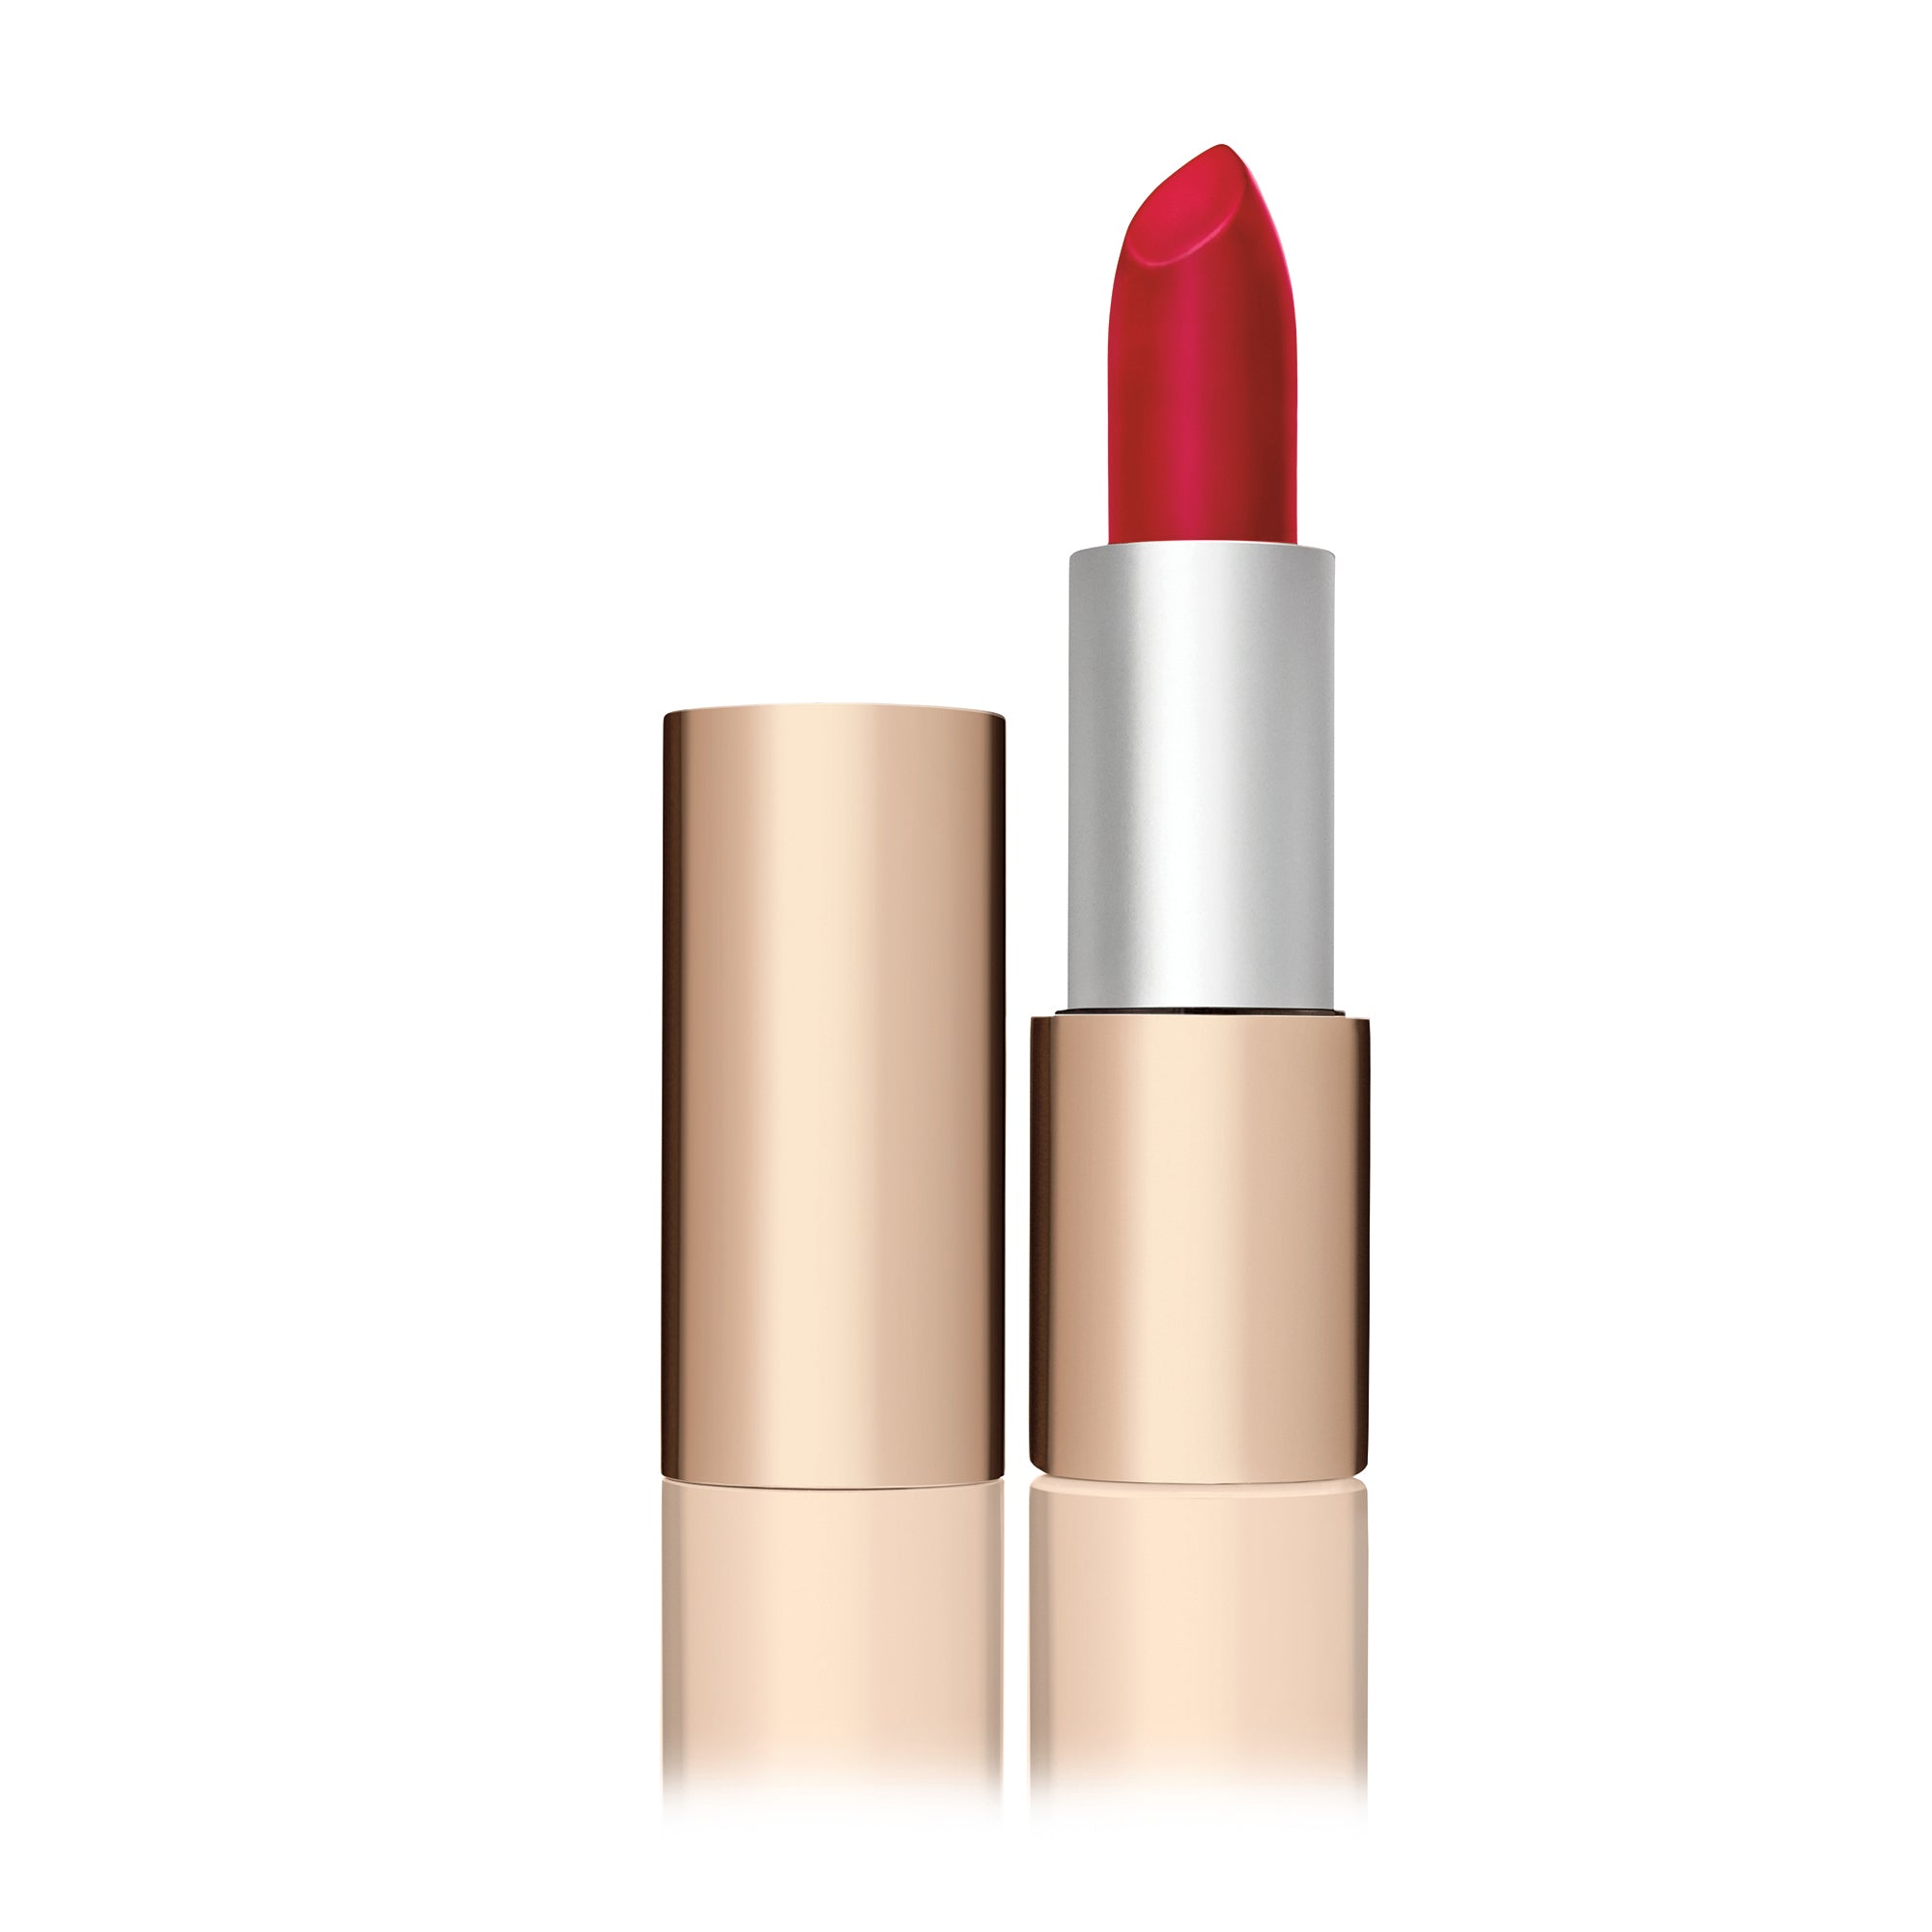 Jane Iredale Triple Luxe Long Lasting Naturally Moist Lipstick / GWEN